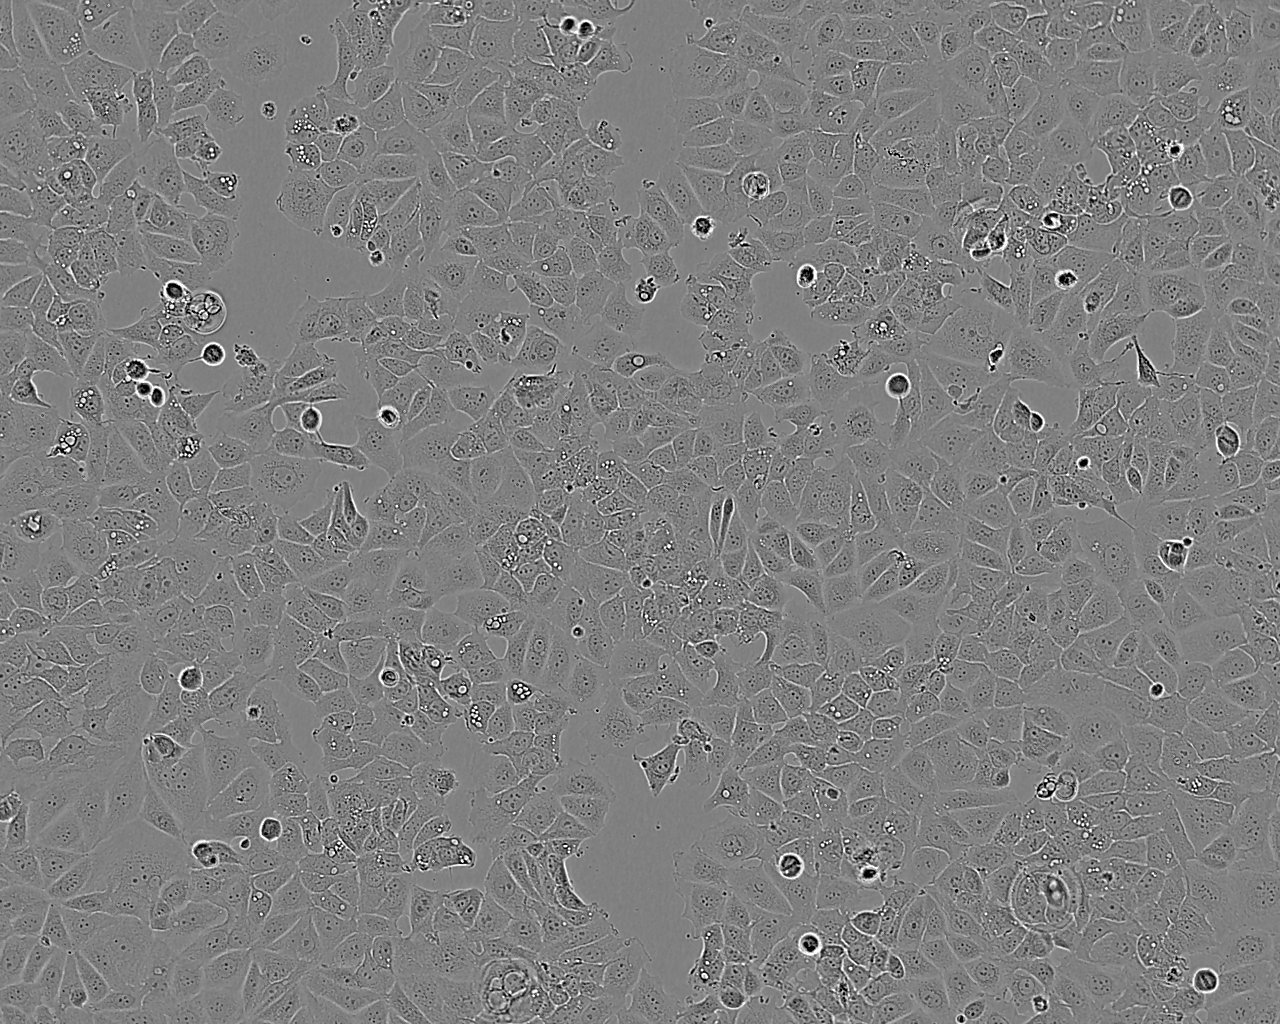 NPA cell line人甲状腺乳头状癌细胞系,CC-LP-1 cell lineNPA cell line